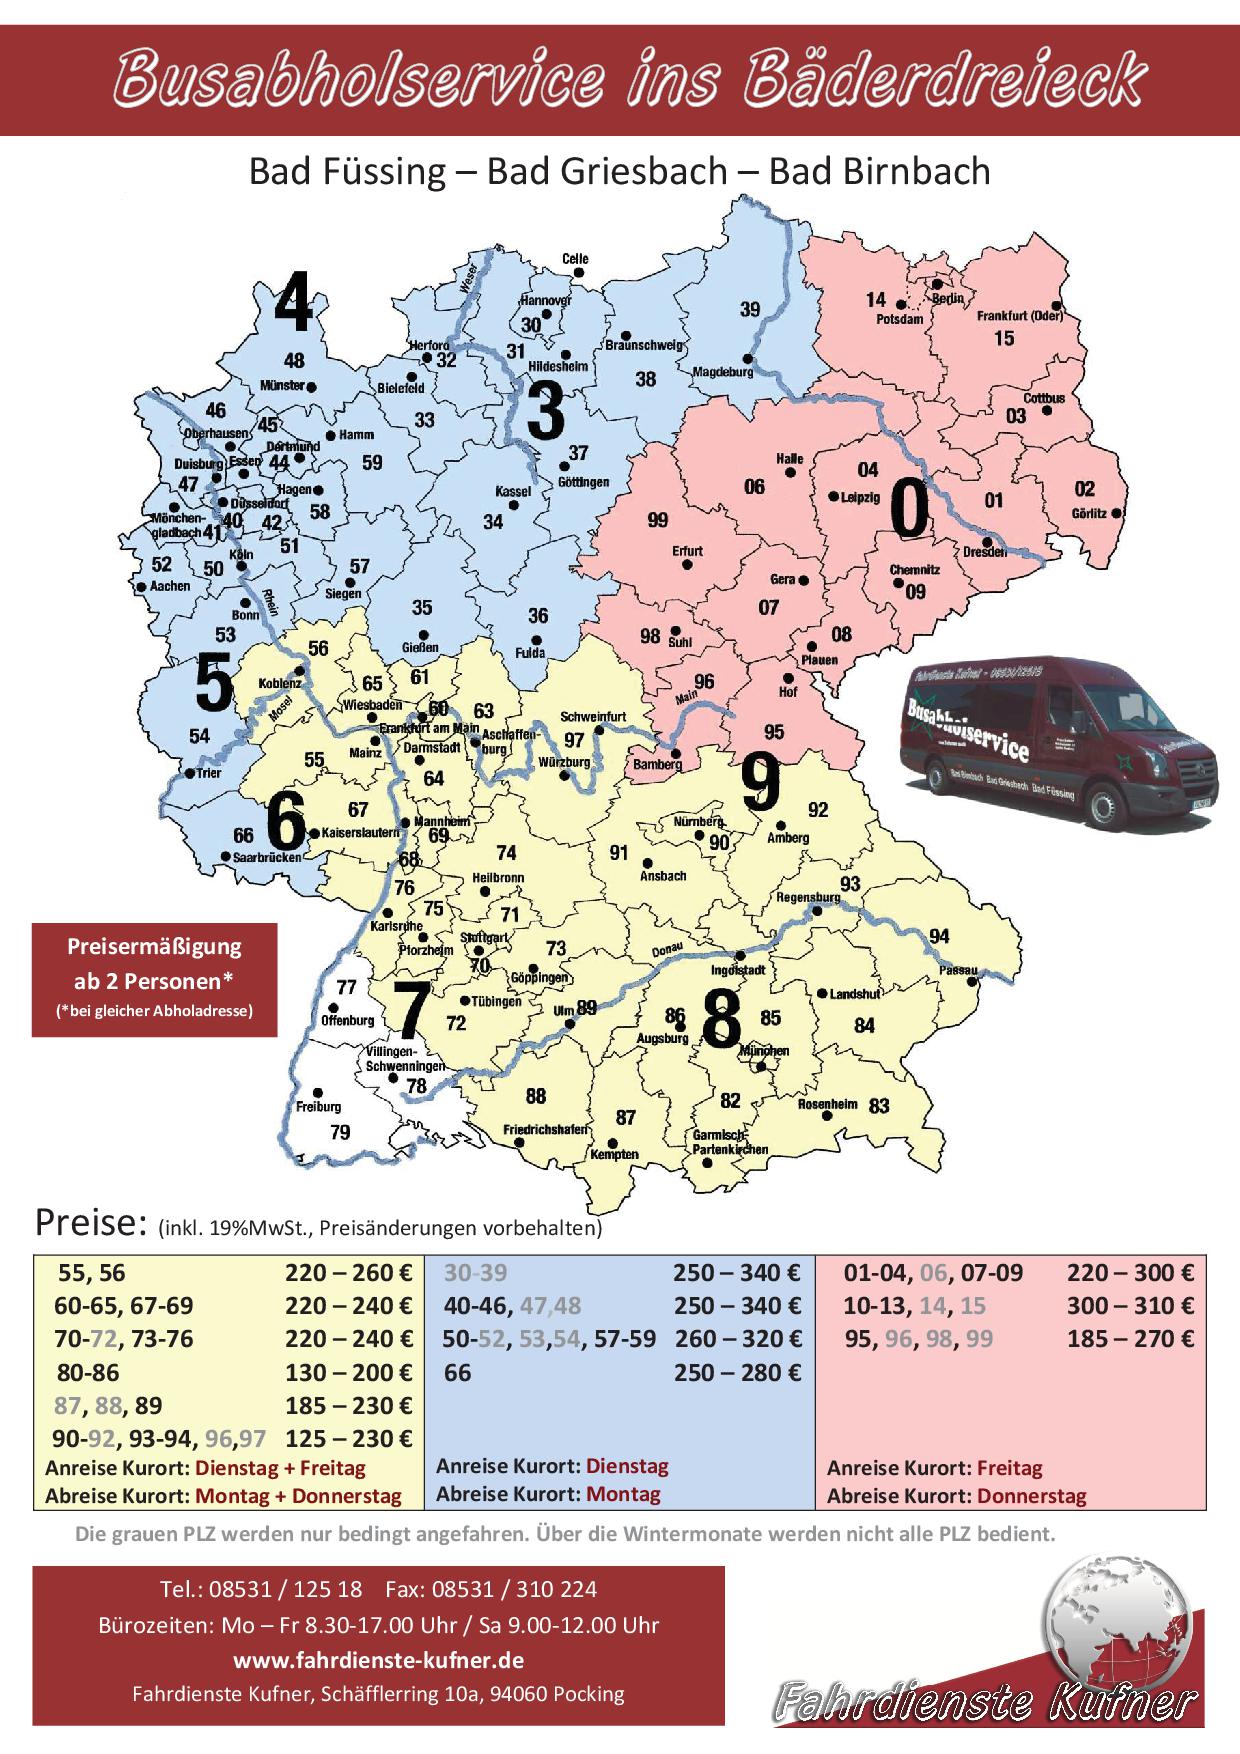 kufner-abholbereiche-karte-preise-2015-724x1024